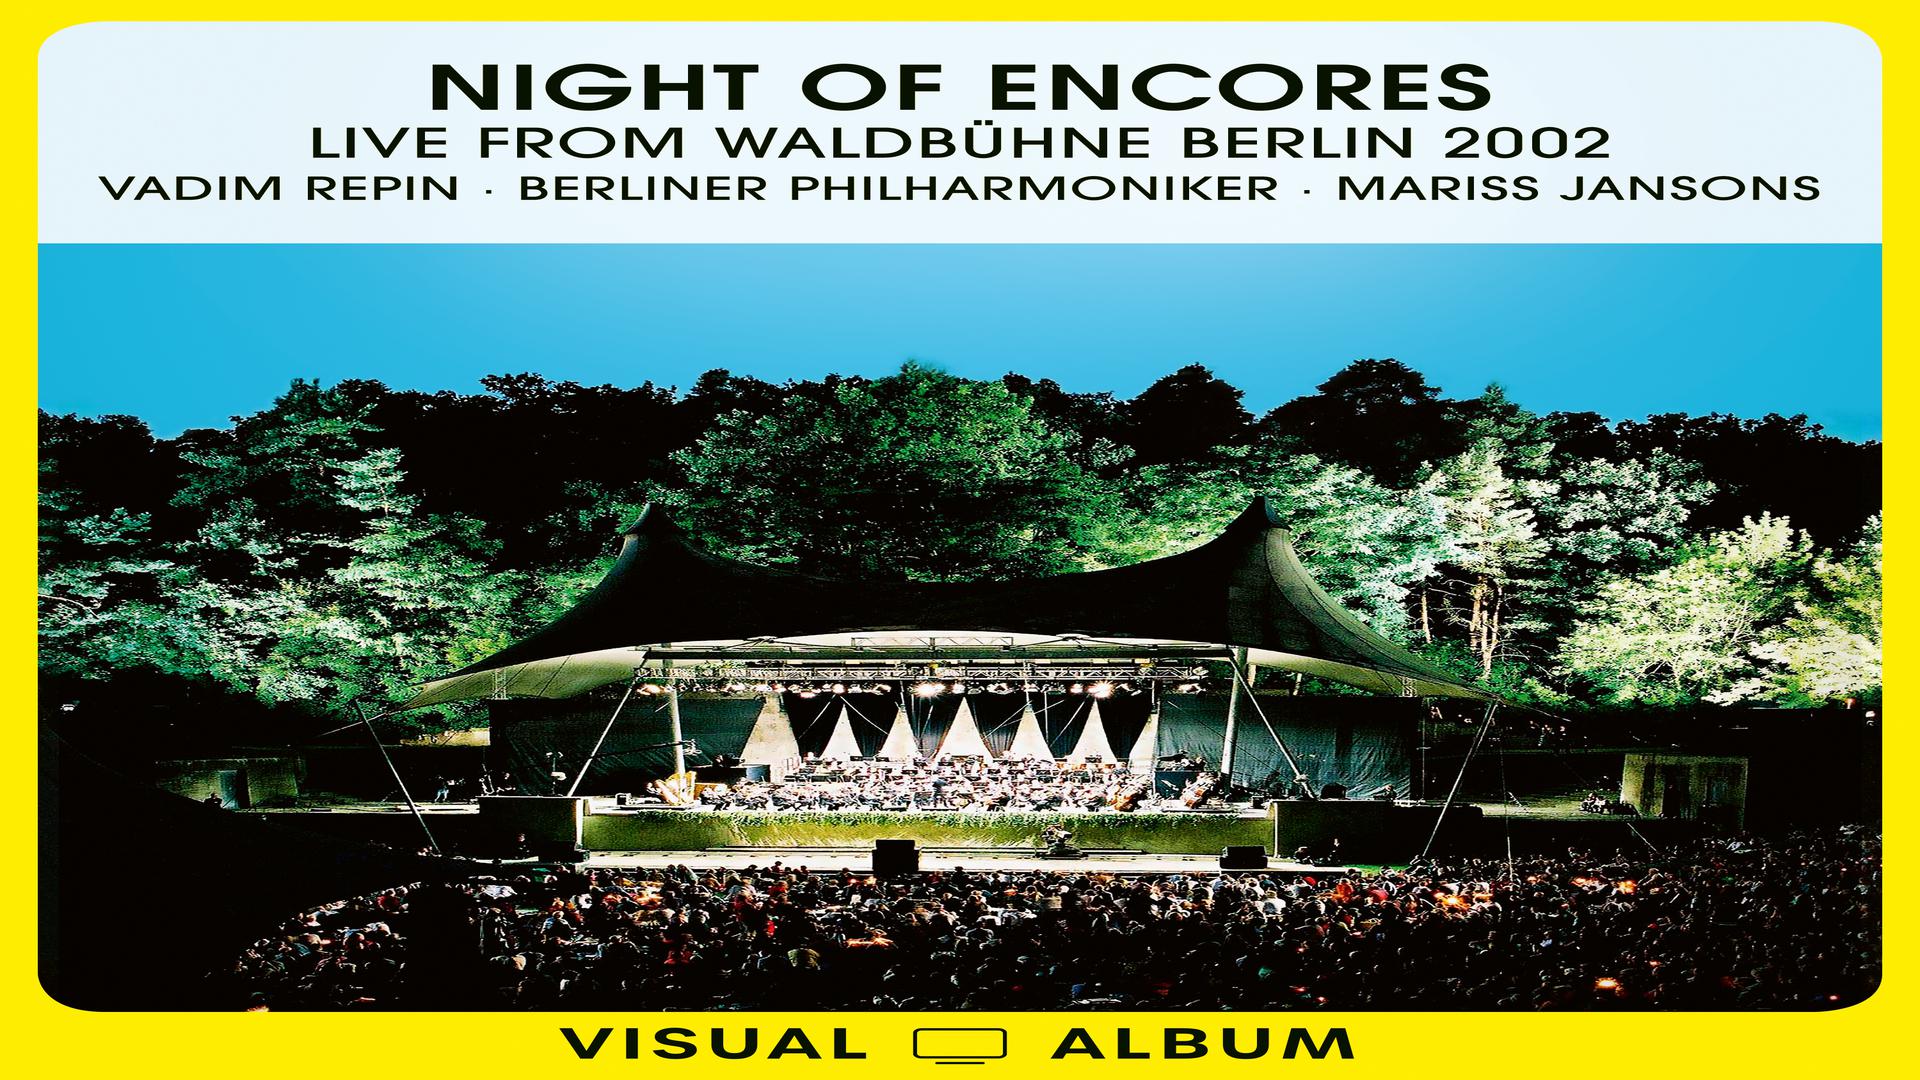 Berliner Philharmoniker - Wagner: Lohengrin, WWV 75 - Prelude to Act 3 (Live from Waldbühne, Berlin / 2002)